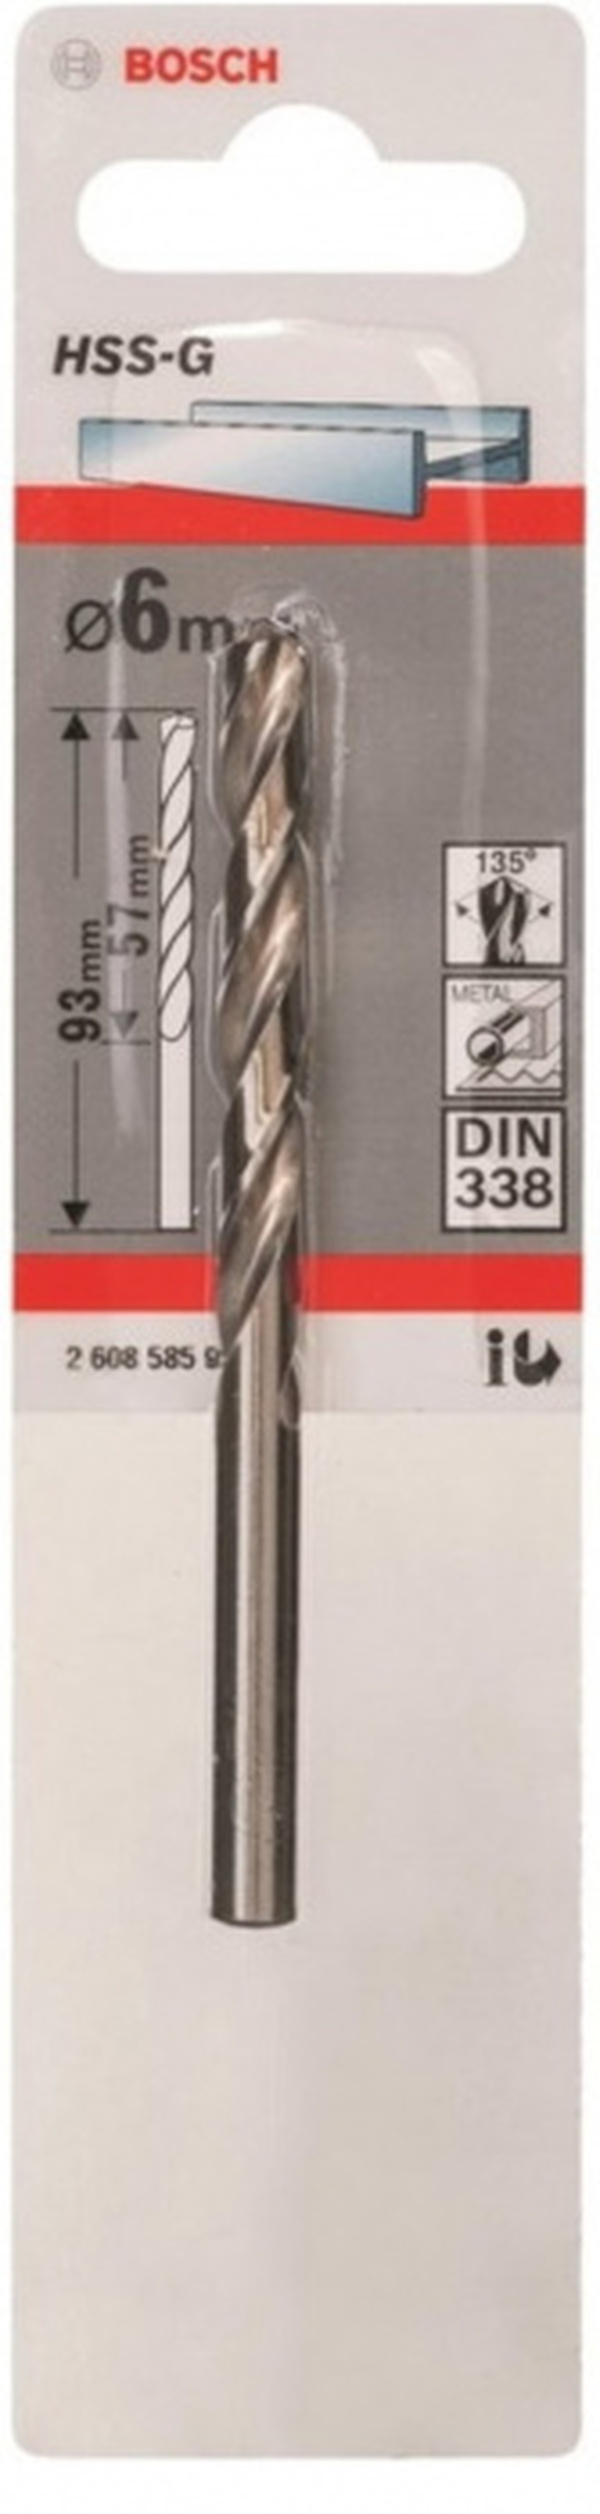 Сверло по металлу Bosch Standard 1 HSS-G 6мм 2608585926